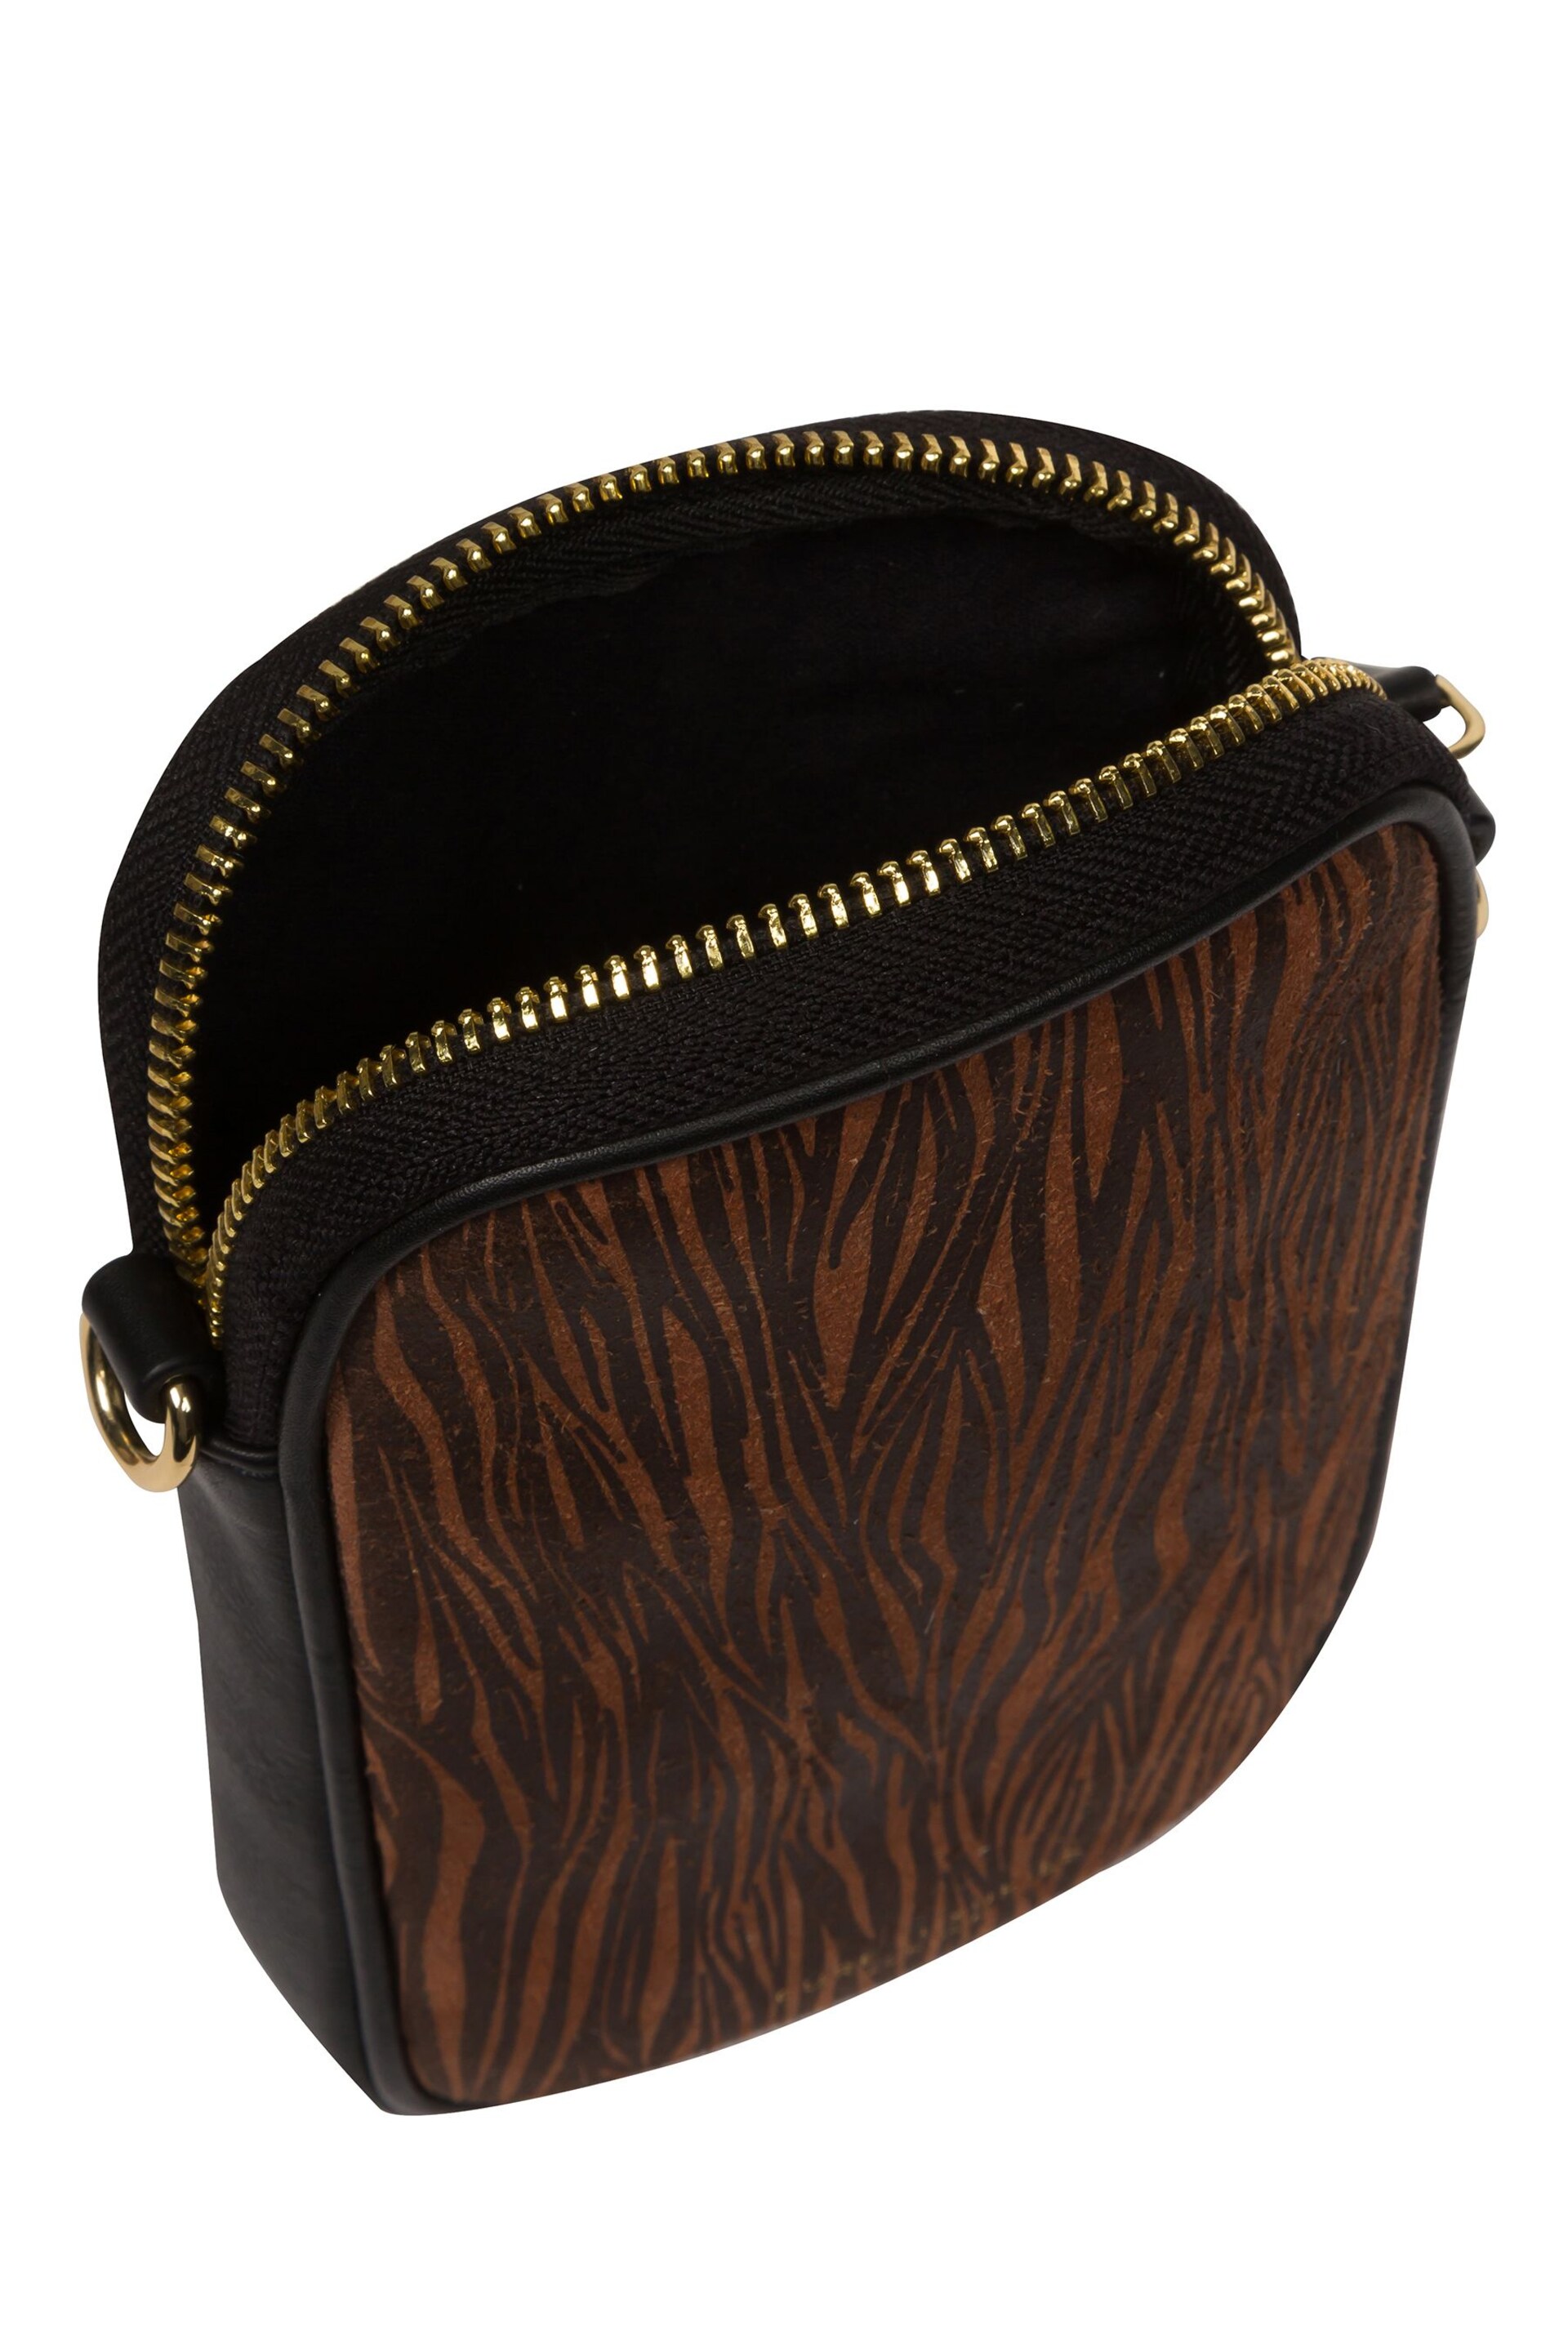 Pure Luxuries London Alaina Nappa Leather Cross-Body Phone Bag - Image 6 of 8